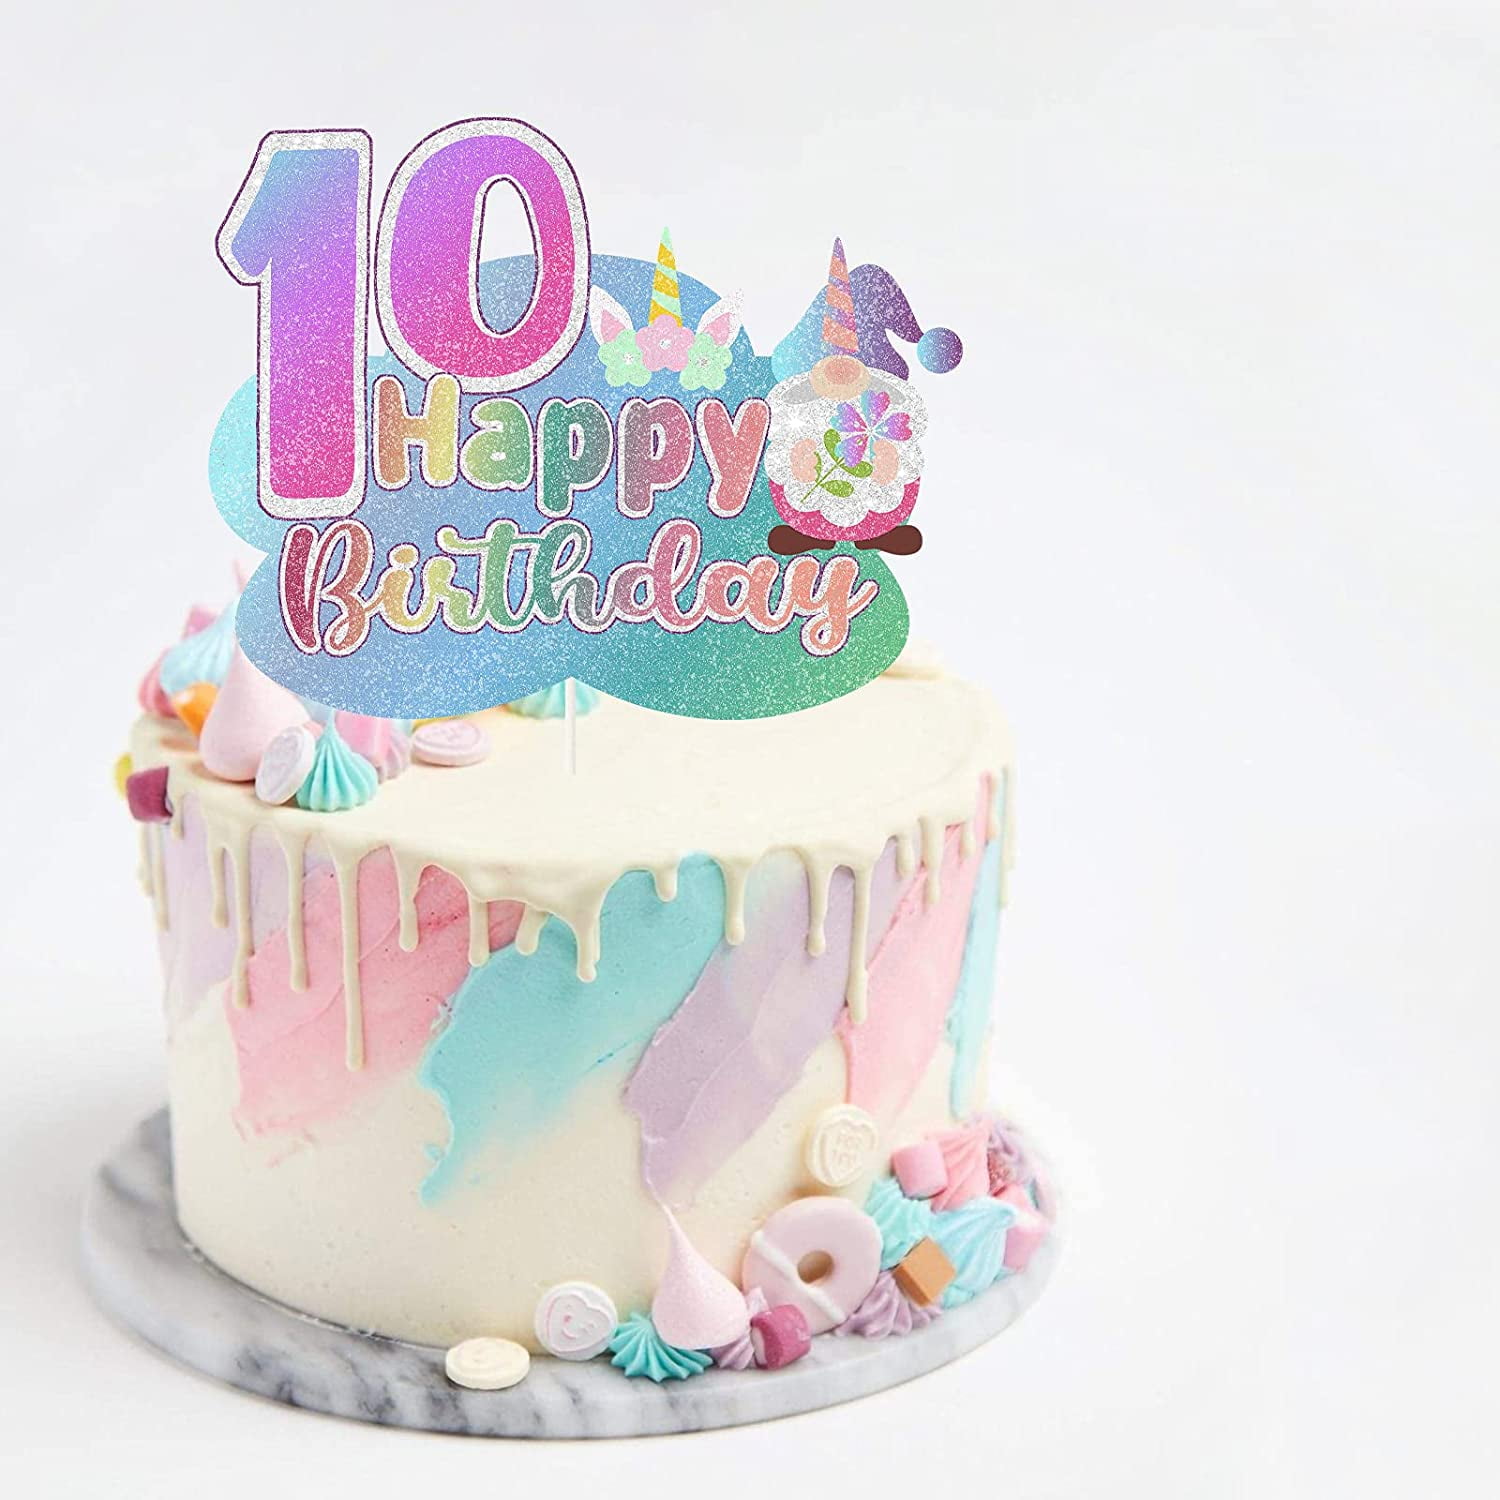 Free 10th Years Happy Birthday Image with Cake and Balloons -  birthdayimg.com